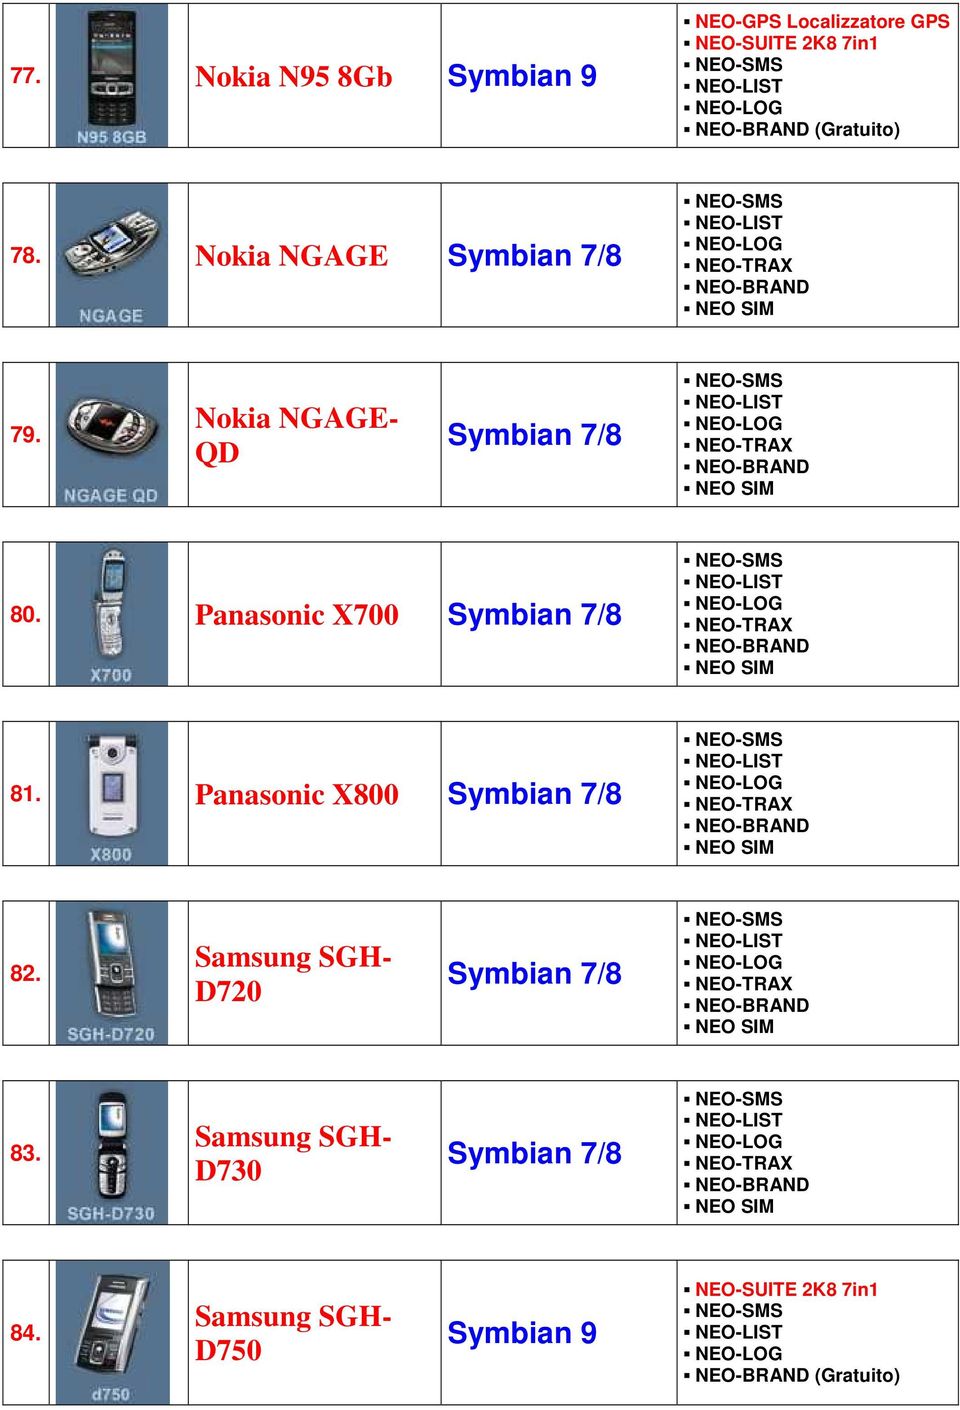 Panasonic X700 Symbian 7/8 81. Panasonic X800 Symbian 7/8 82.